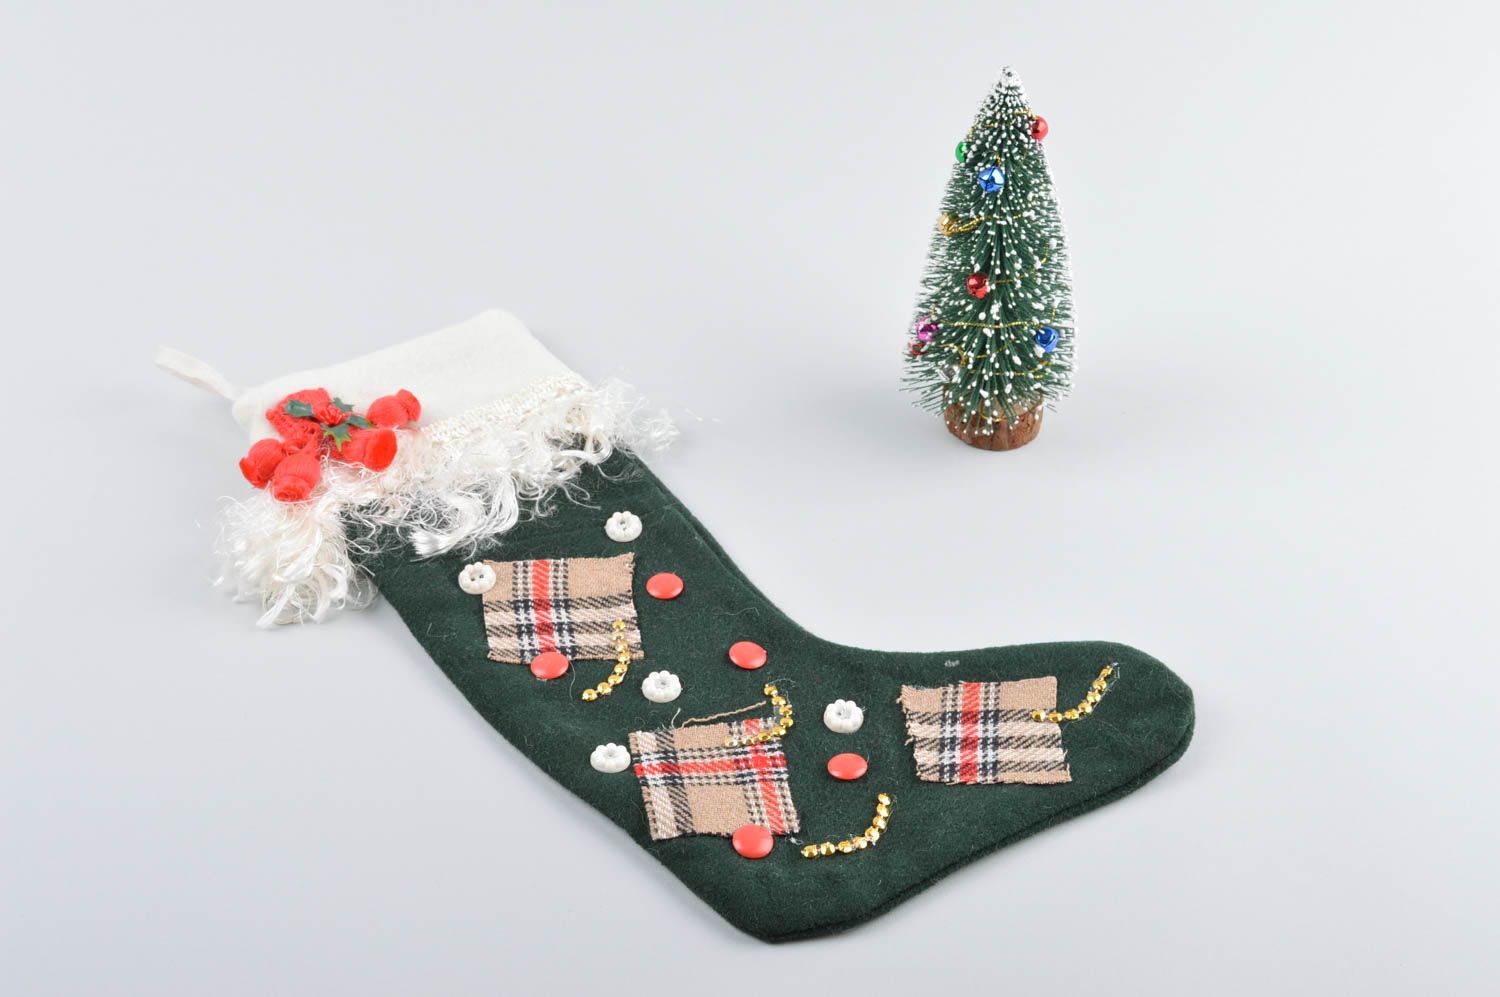 Handmade decorations Christmas stocking Xmas stockings souvenir ideas cool gifts photo 2